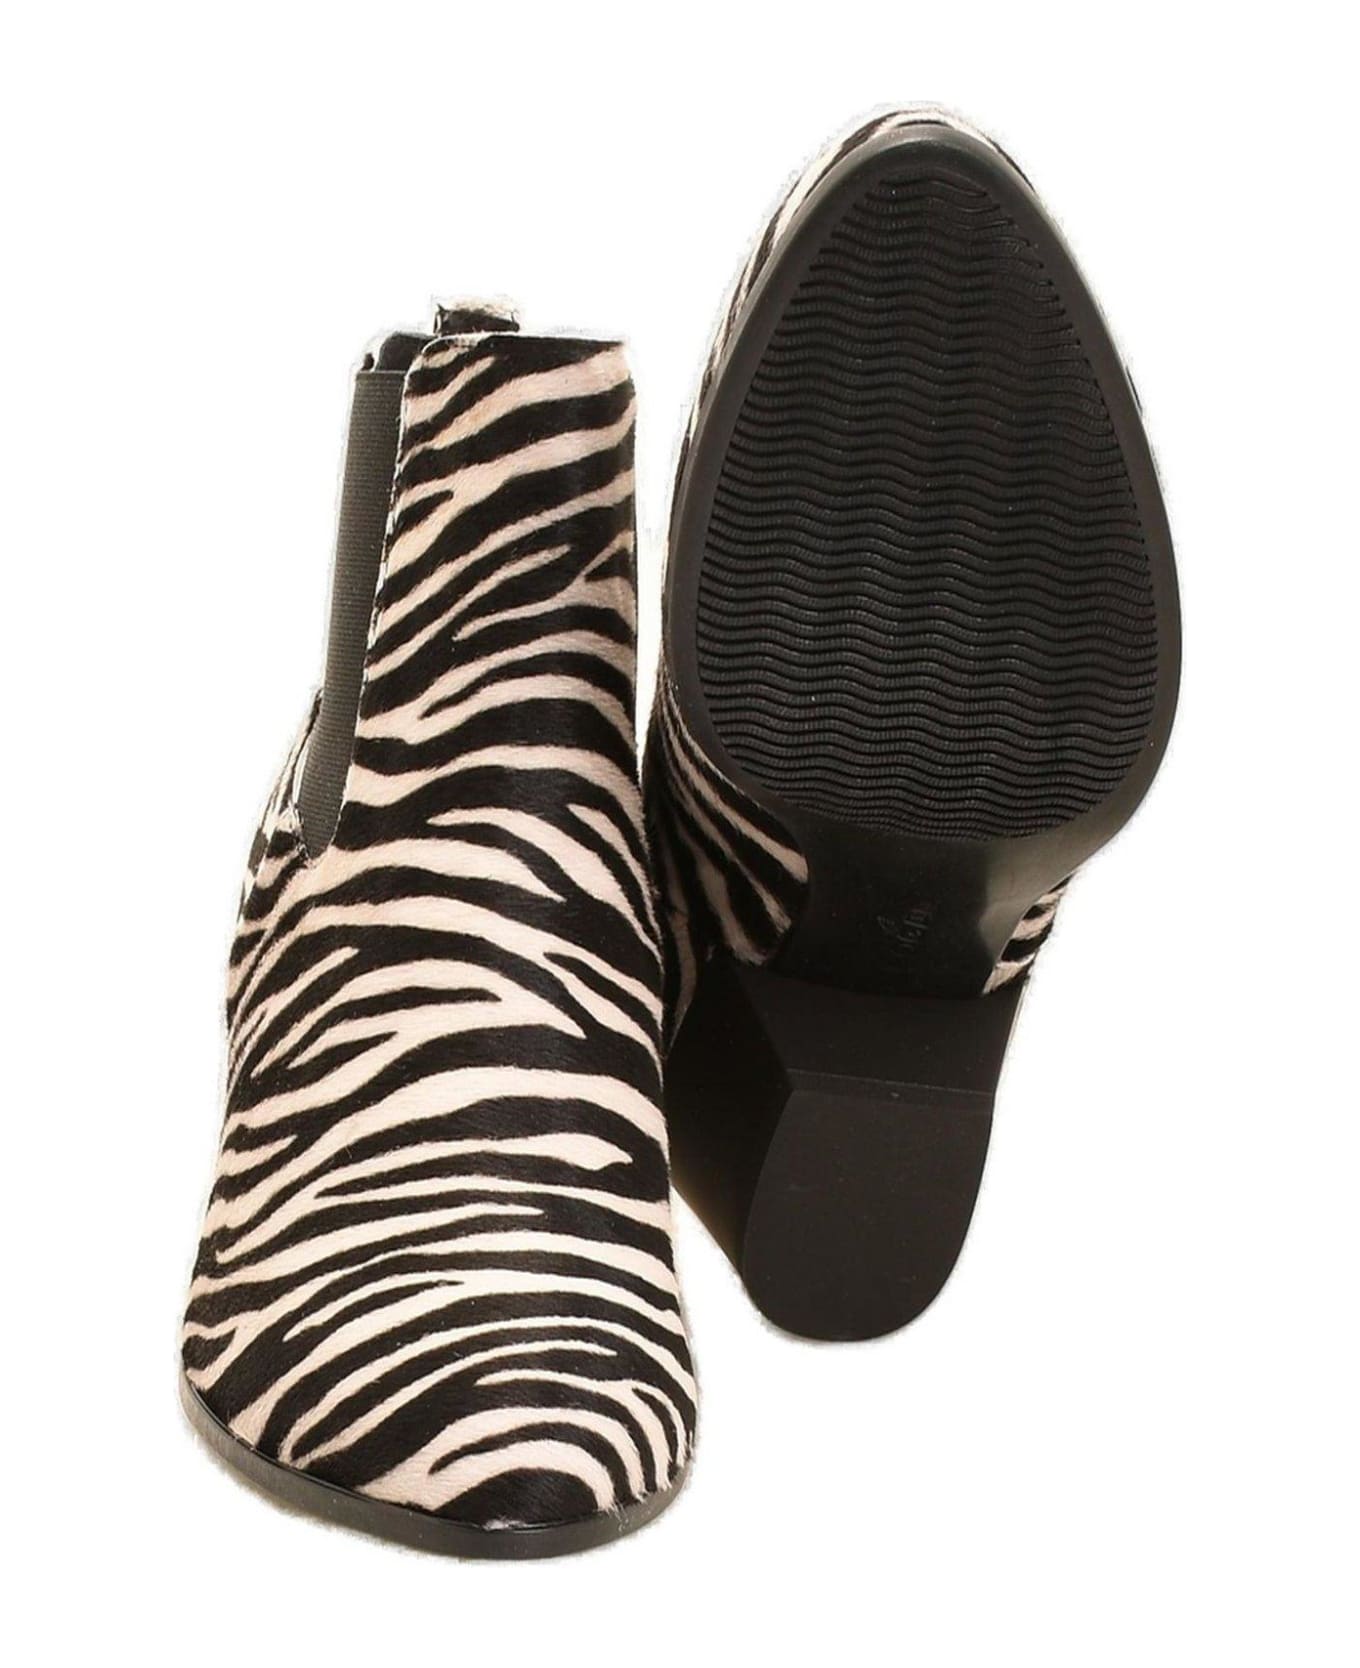 Hogan H401 Chelssea Zebra Print Ankle Boots Hogan - WHITE